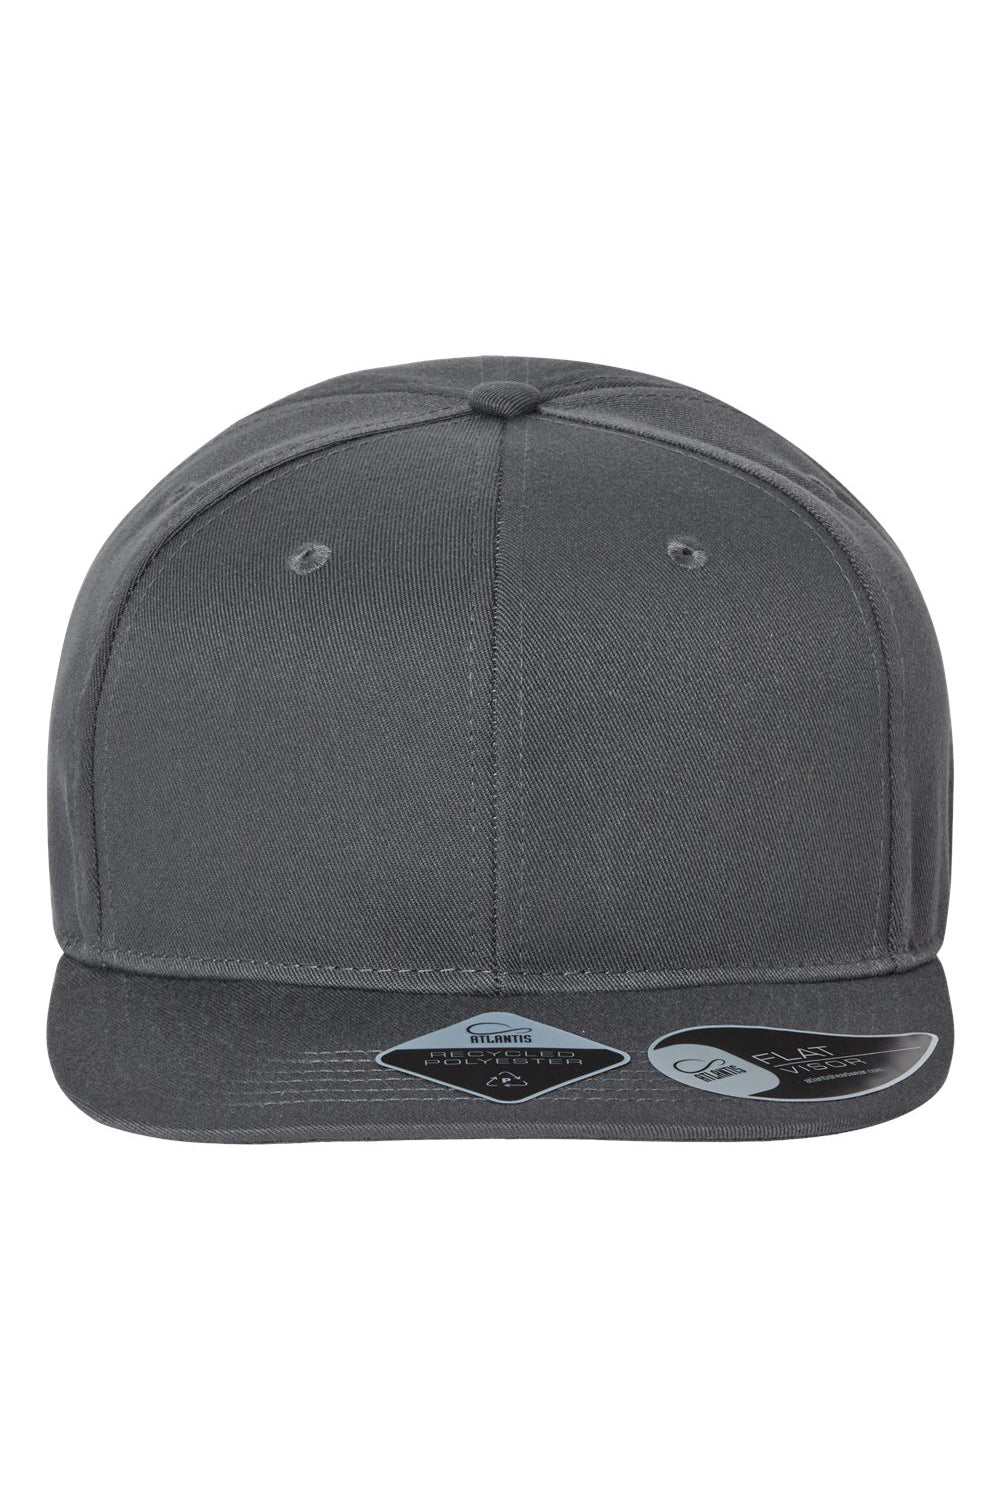 Atlantis Headwear JAMES Mens Sustainable Flat Bill Snapback Hat Dark Grey Flat Front